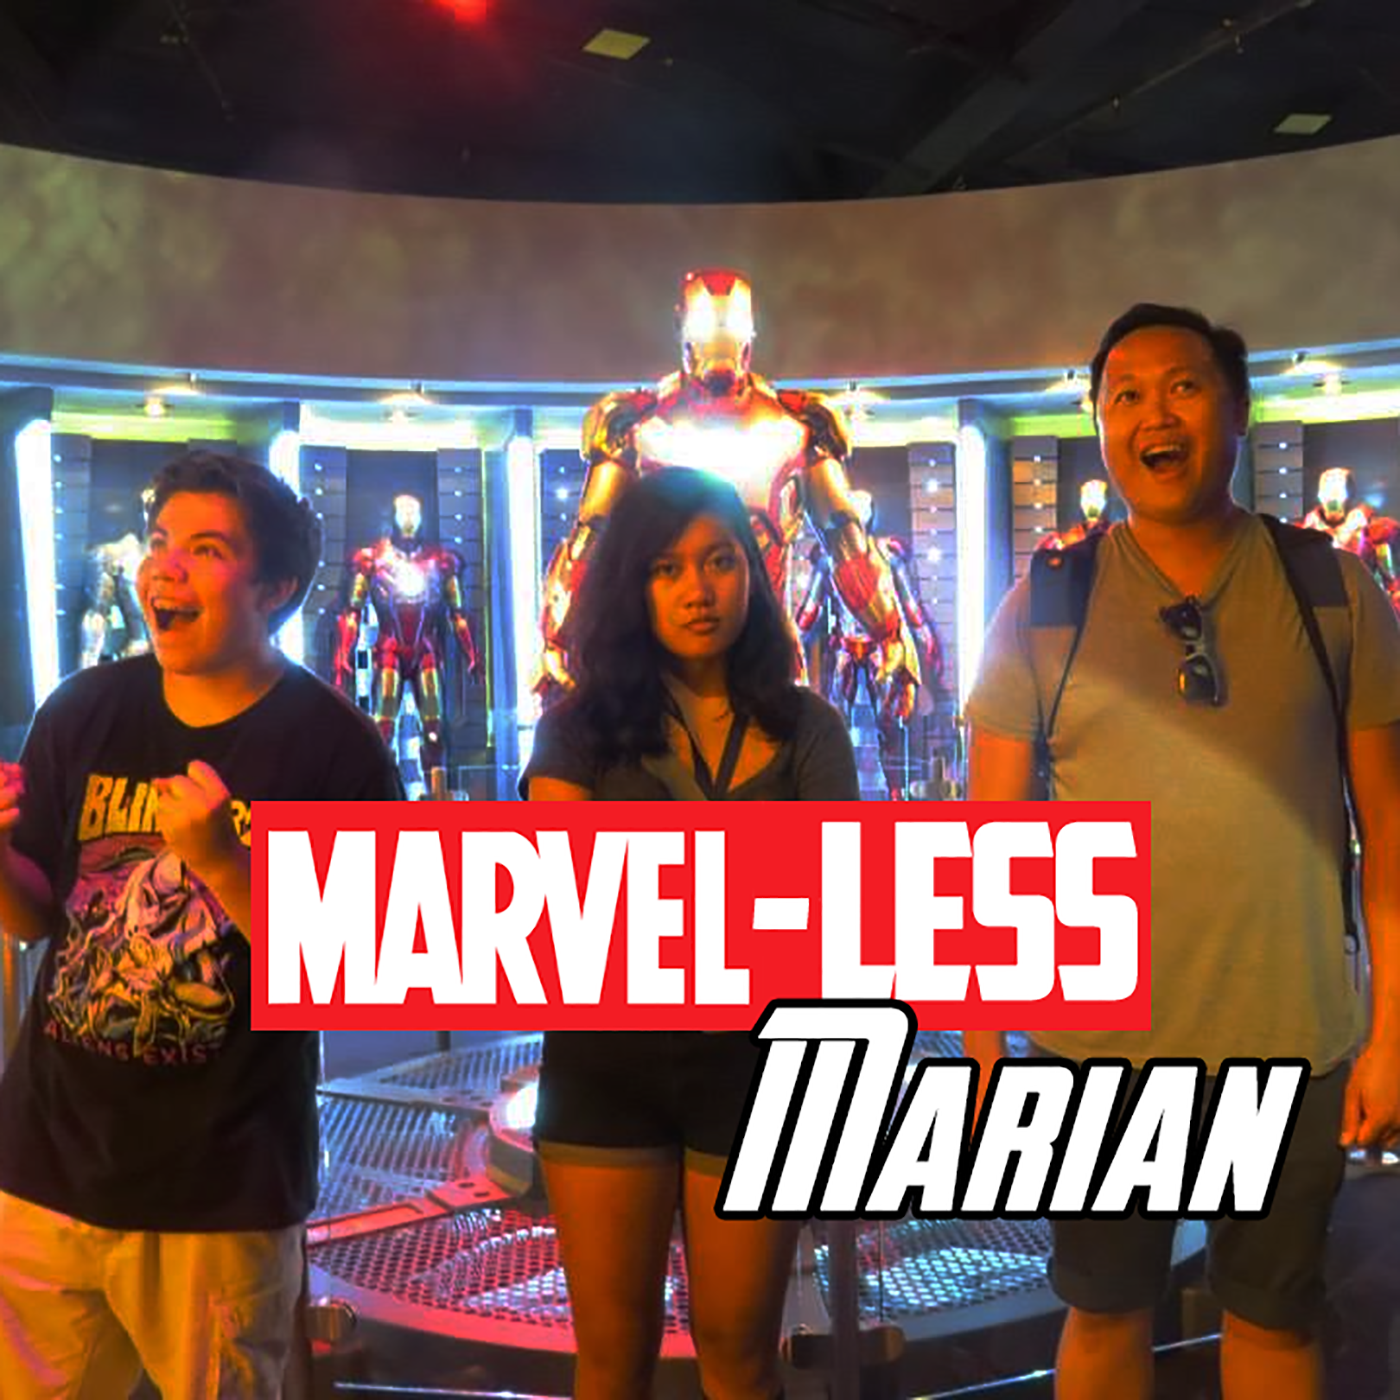 Marvel-Less Marian